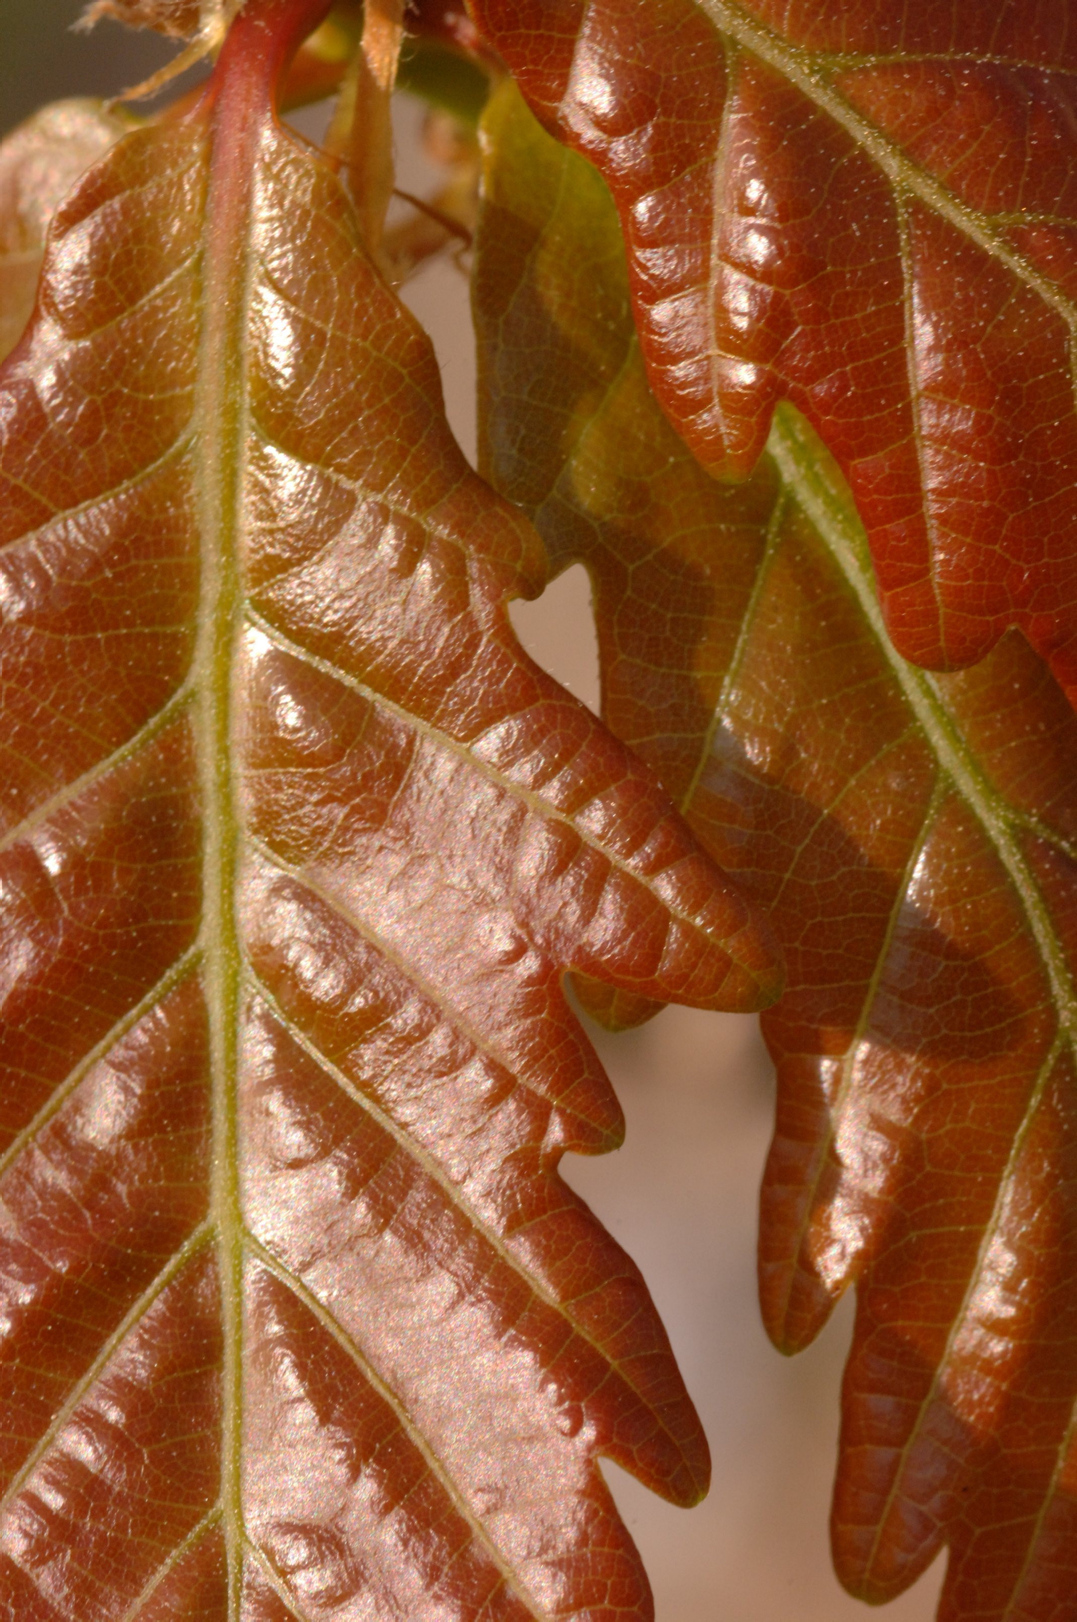 Sessile oak - Quercus petraea young leaves.